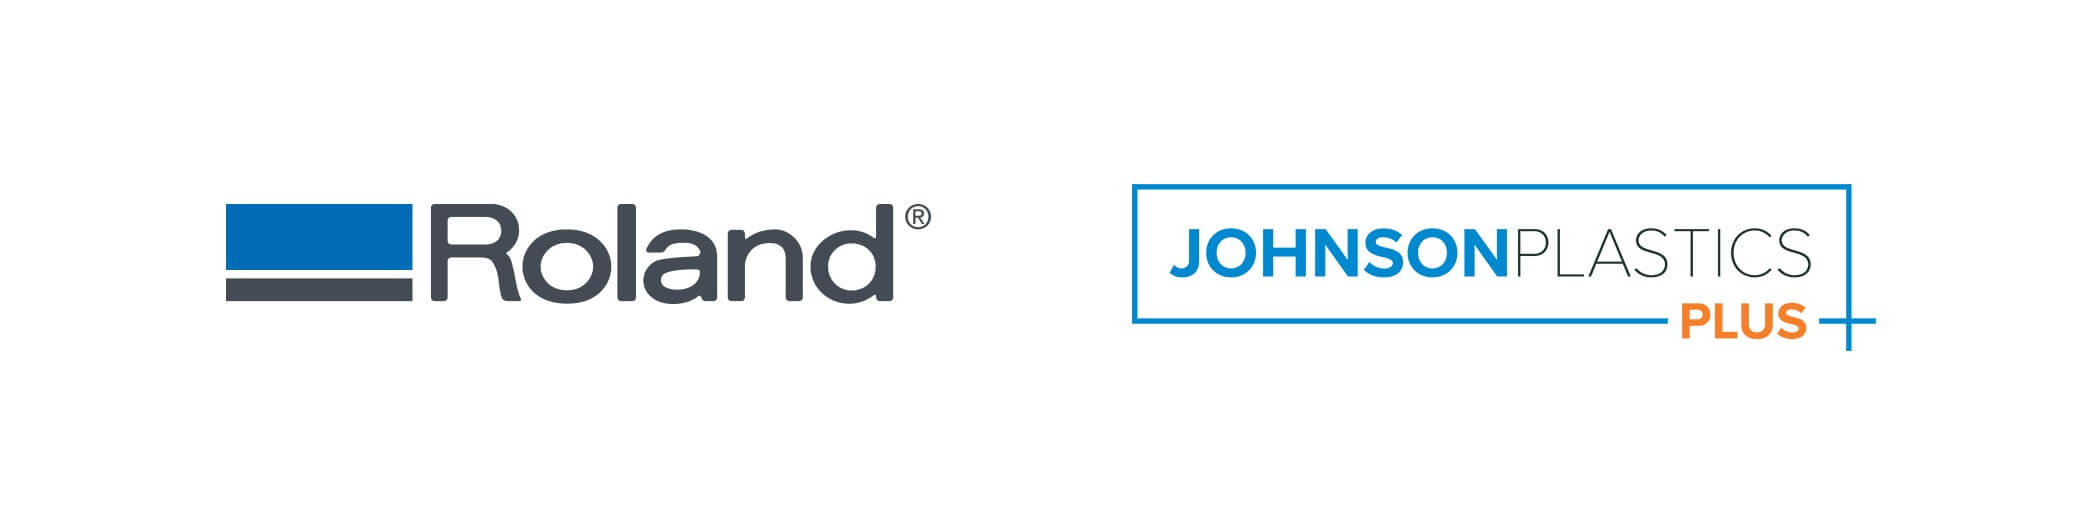 Roland DGA Signs Johnson Plastics Plus as new authorized rotary engraving dealer.